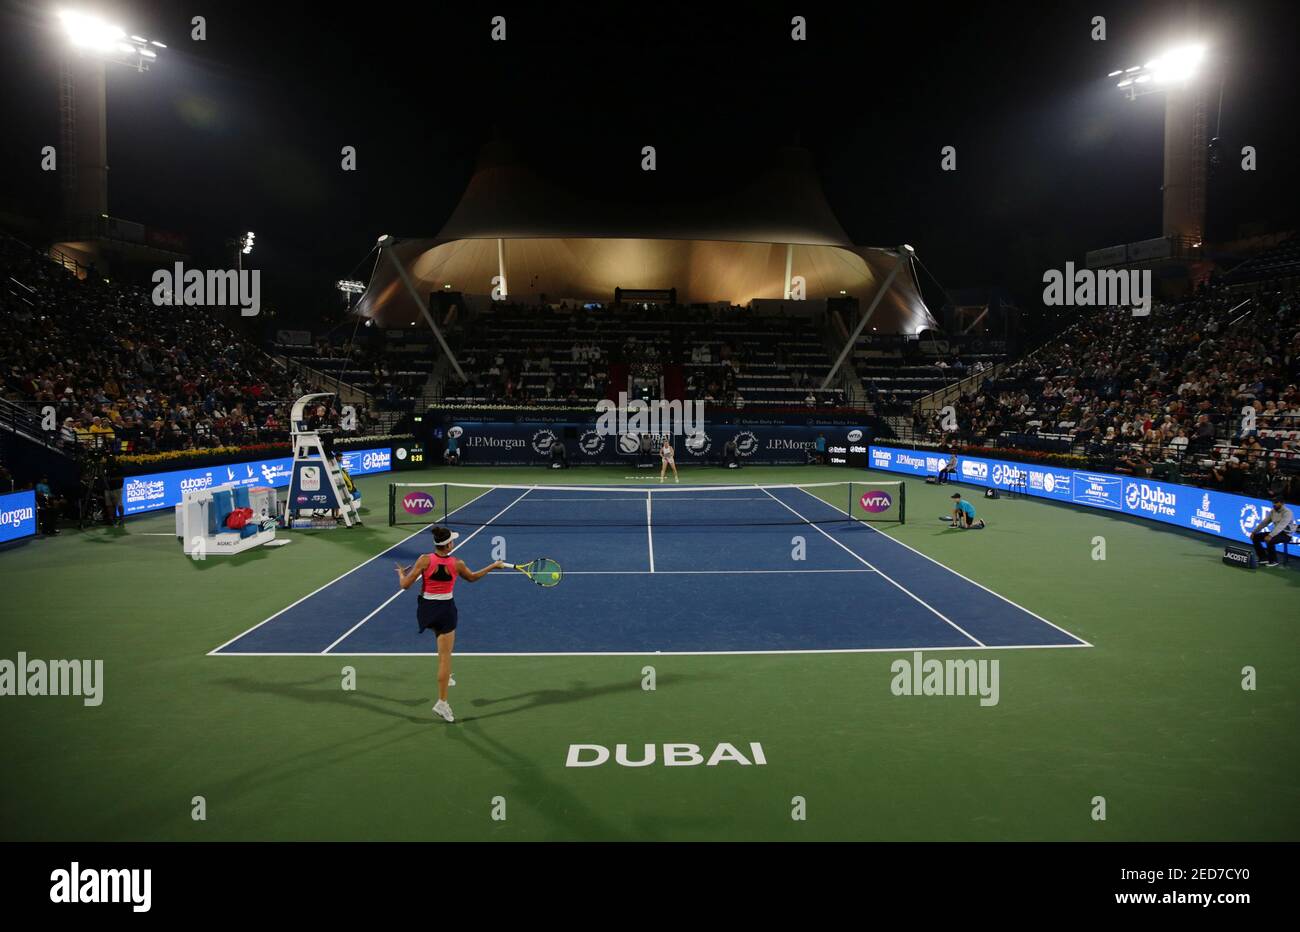 Tennis - WTA Premier - Dubai Tennis Championships - Dubai Duty Free Tennis  Stadium, Dubai, United Arab Emirates - February 21, 2020 General view of  Jennifer Brady of the U.S. in action